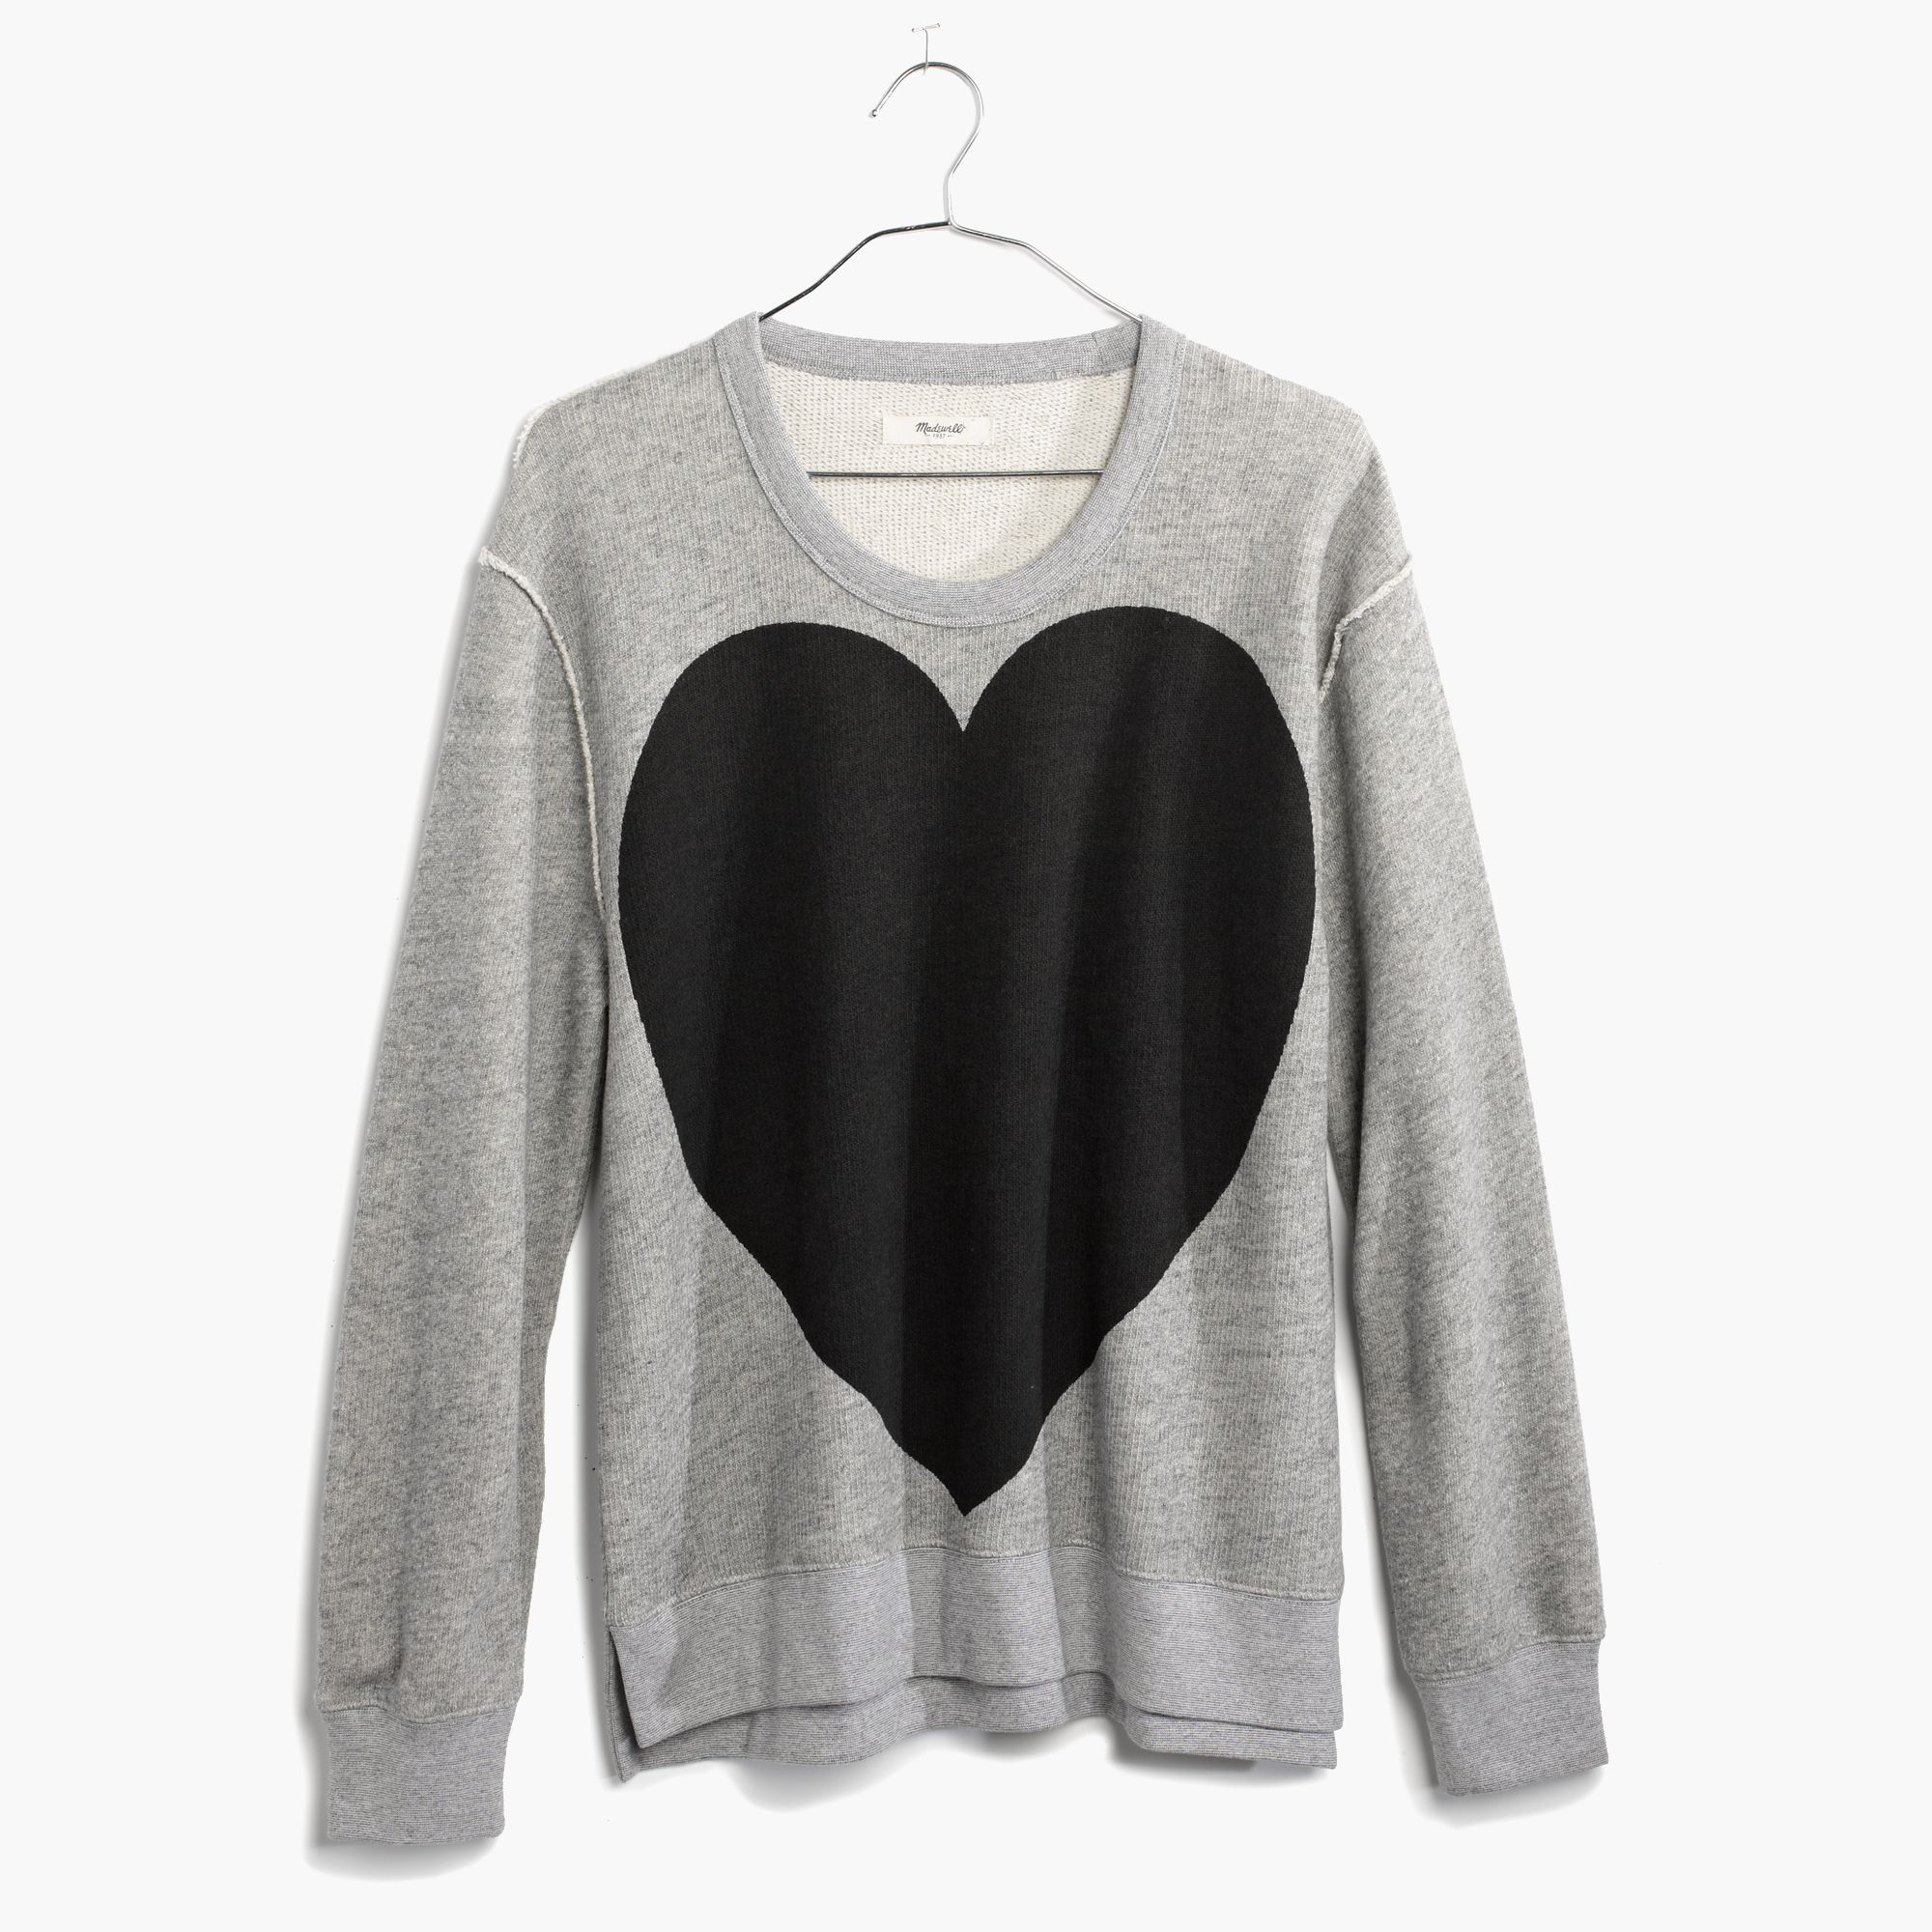 Lyst - Madewell Heart Sweatshirt in Black